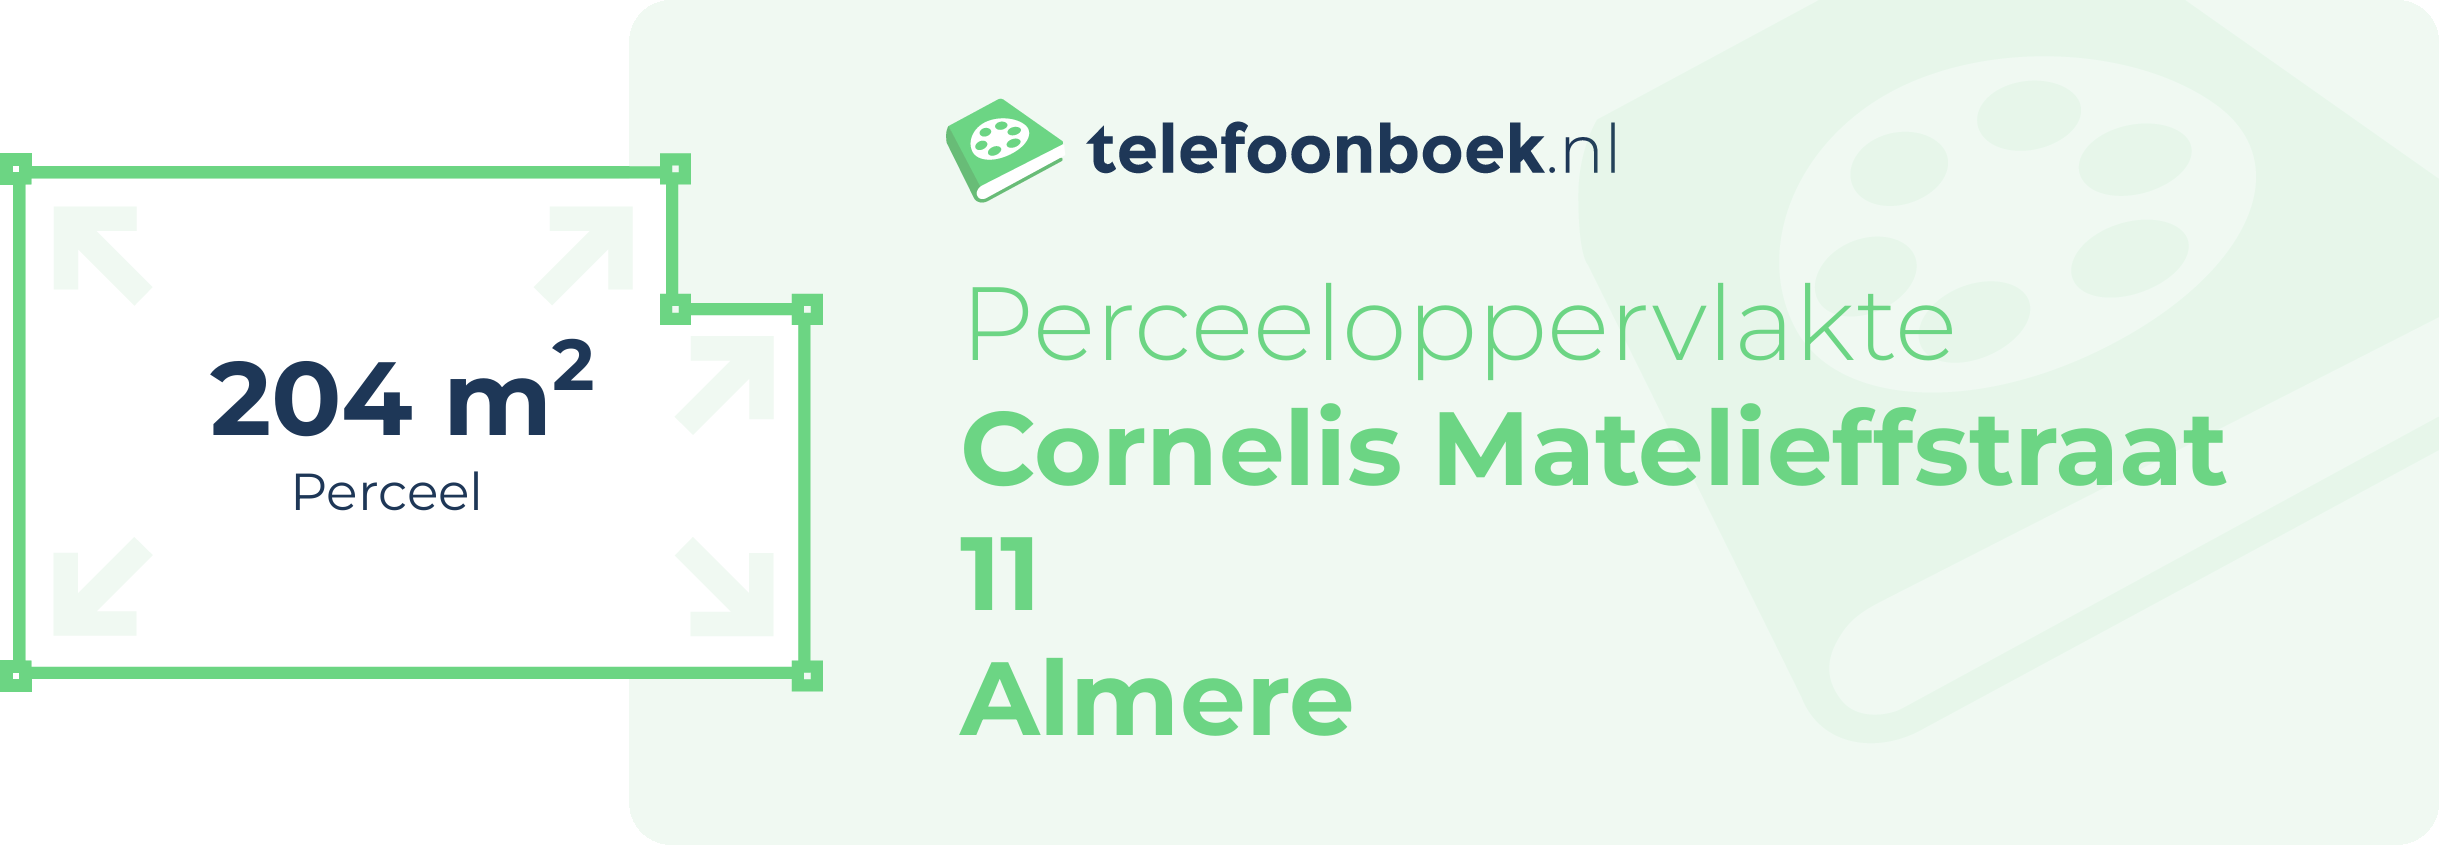 Perceeloppervlakte Cornelis Matelieffstraat 11 Almere